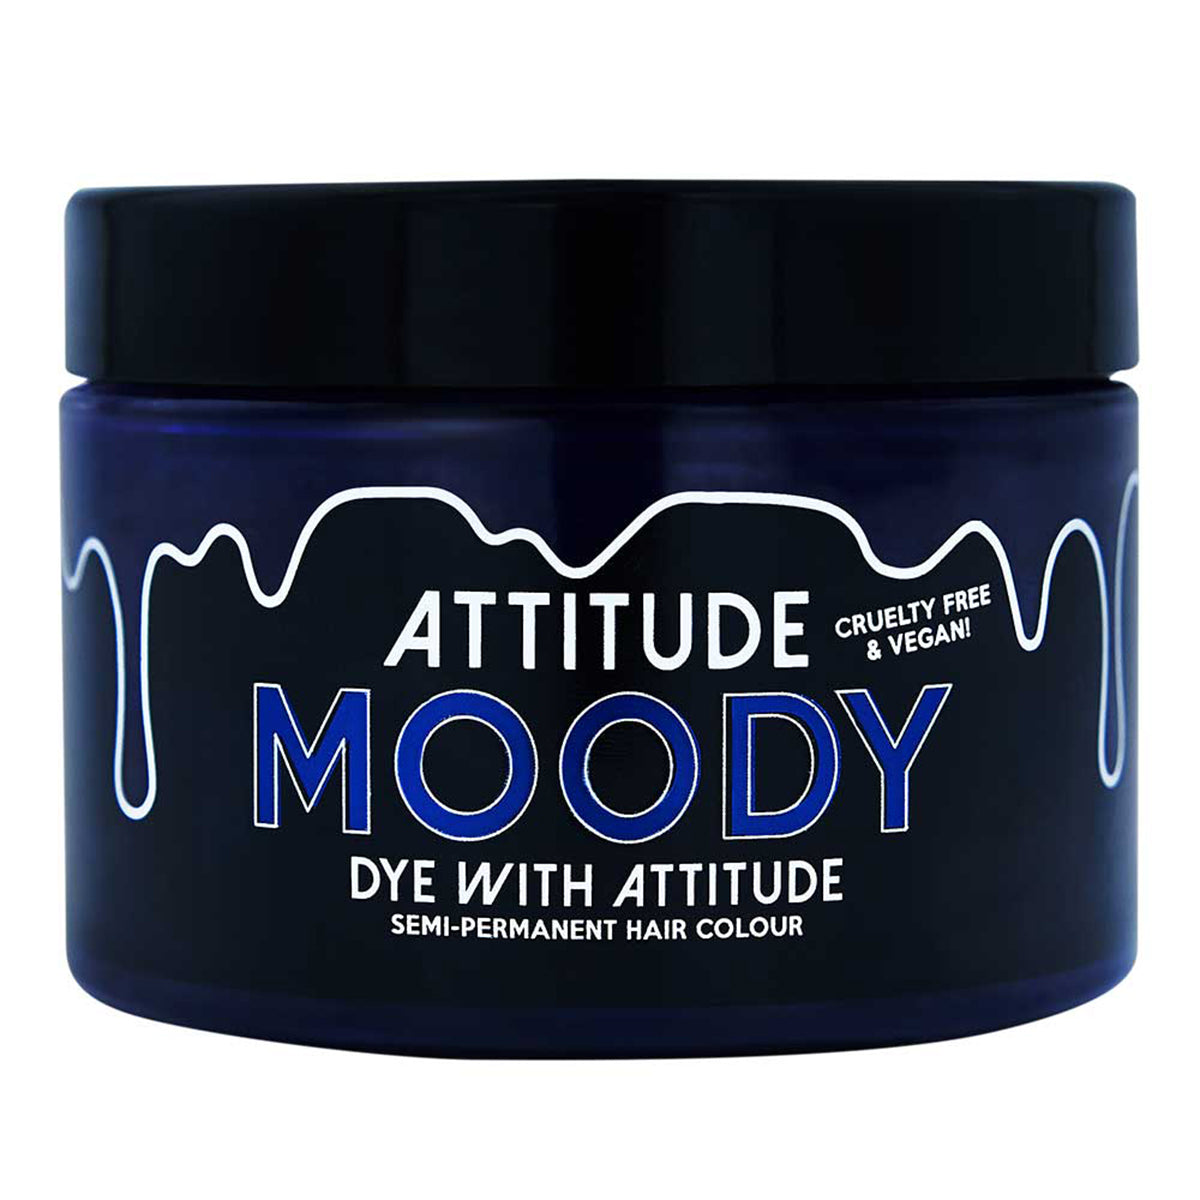 MOODY BLUE - Teinture Attitude - 135ml